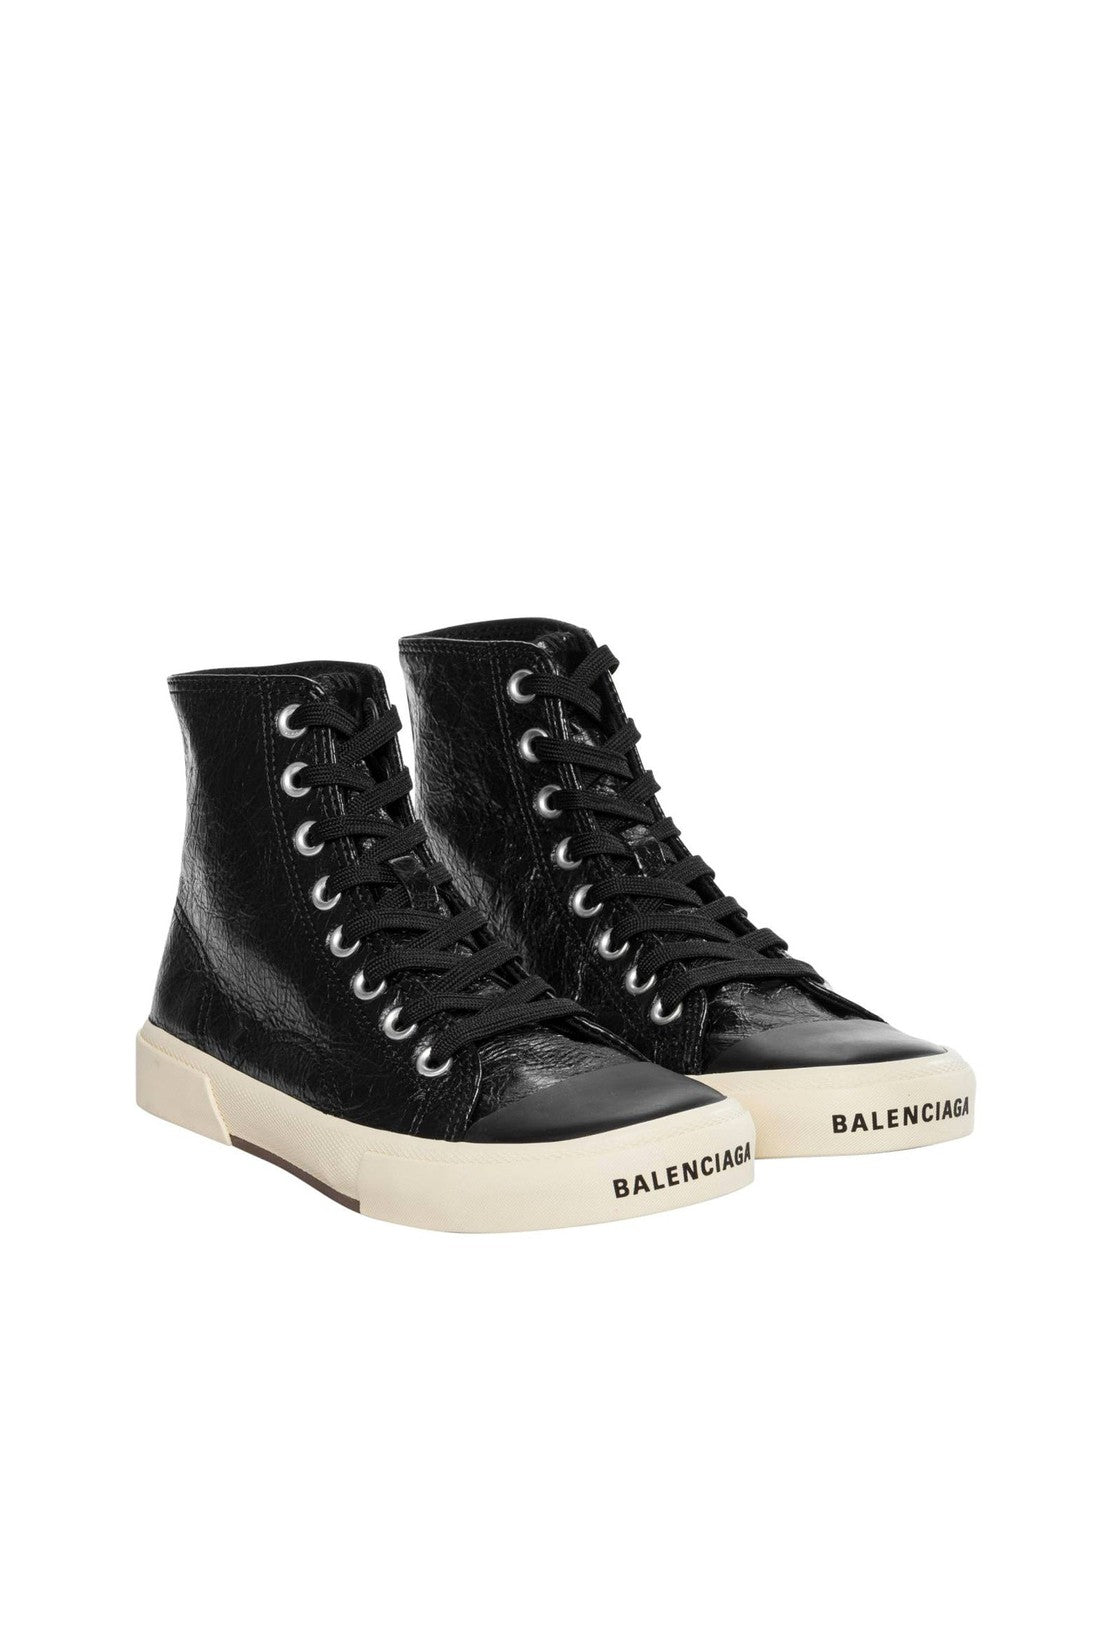 Balenciaga Paris Leather Sneakers